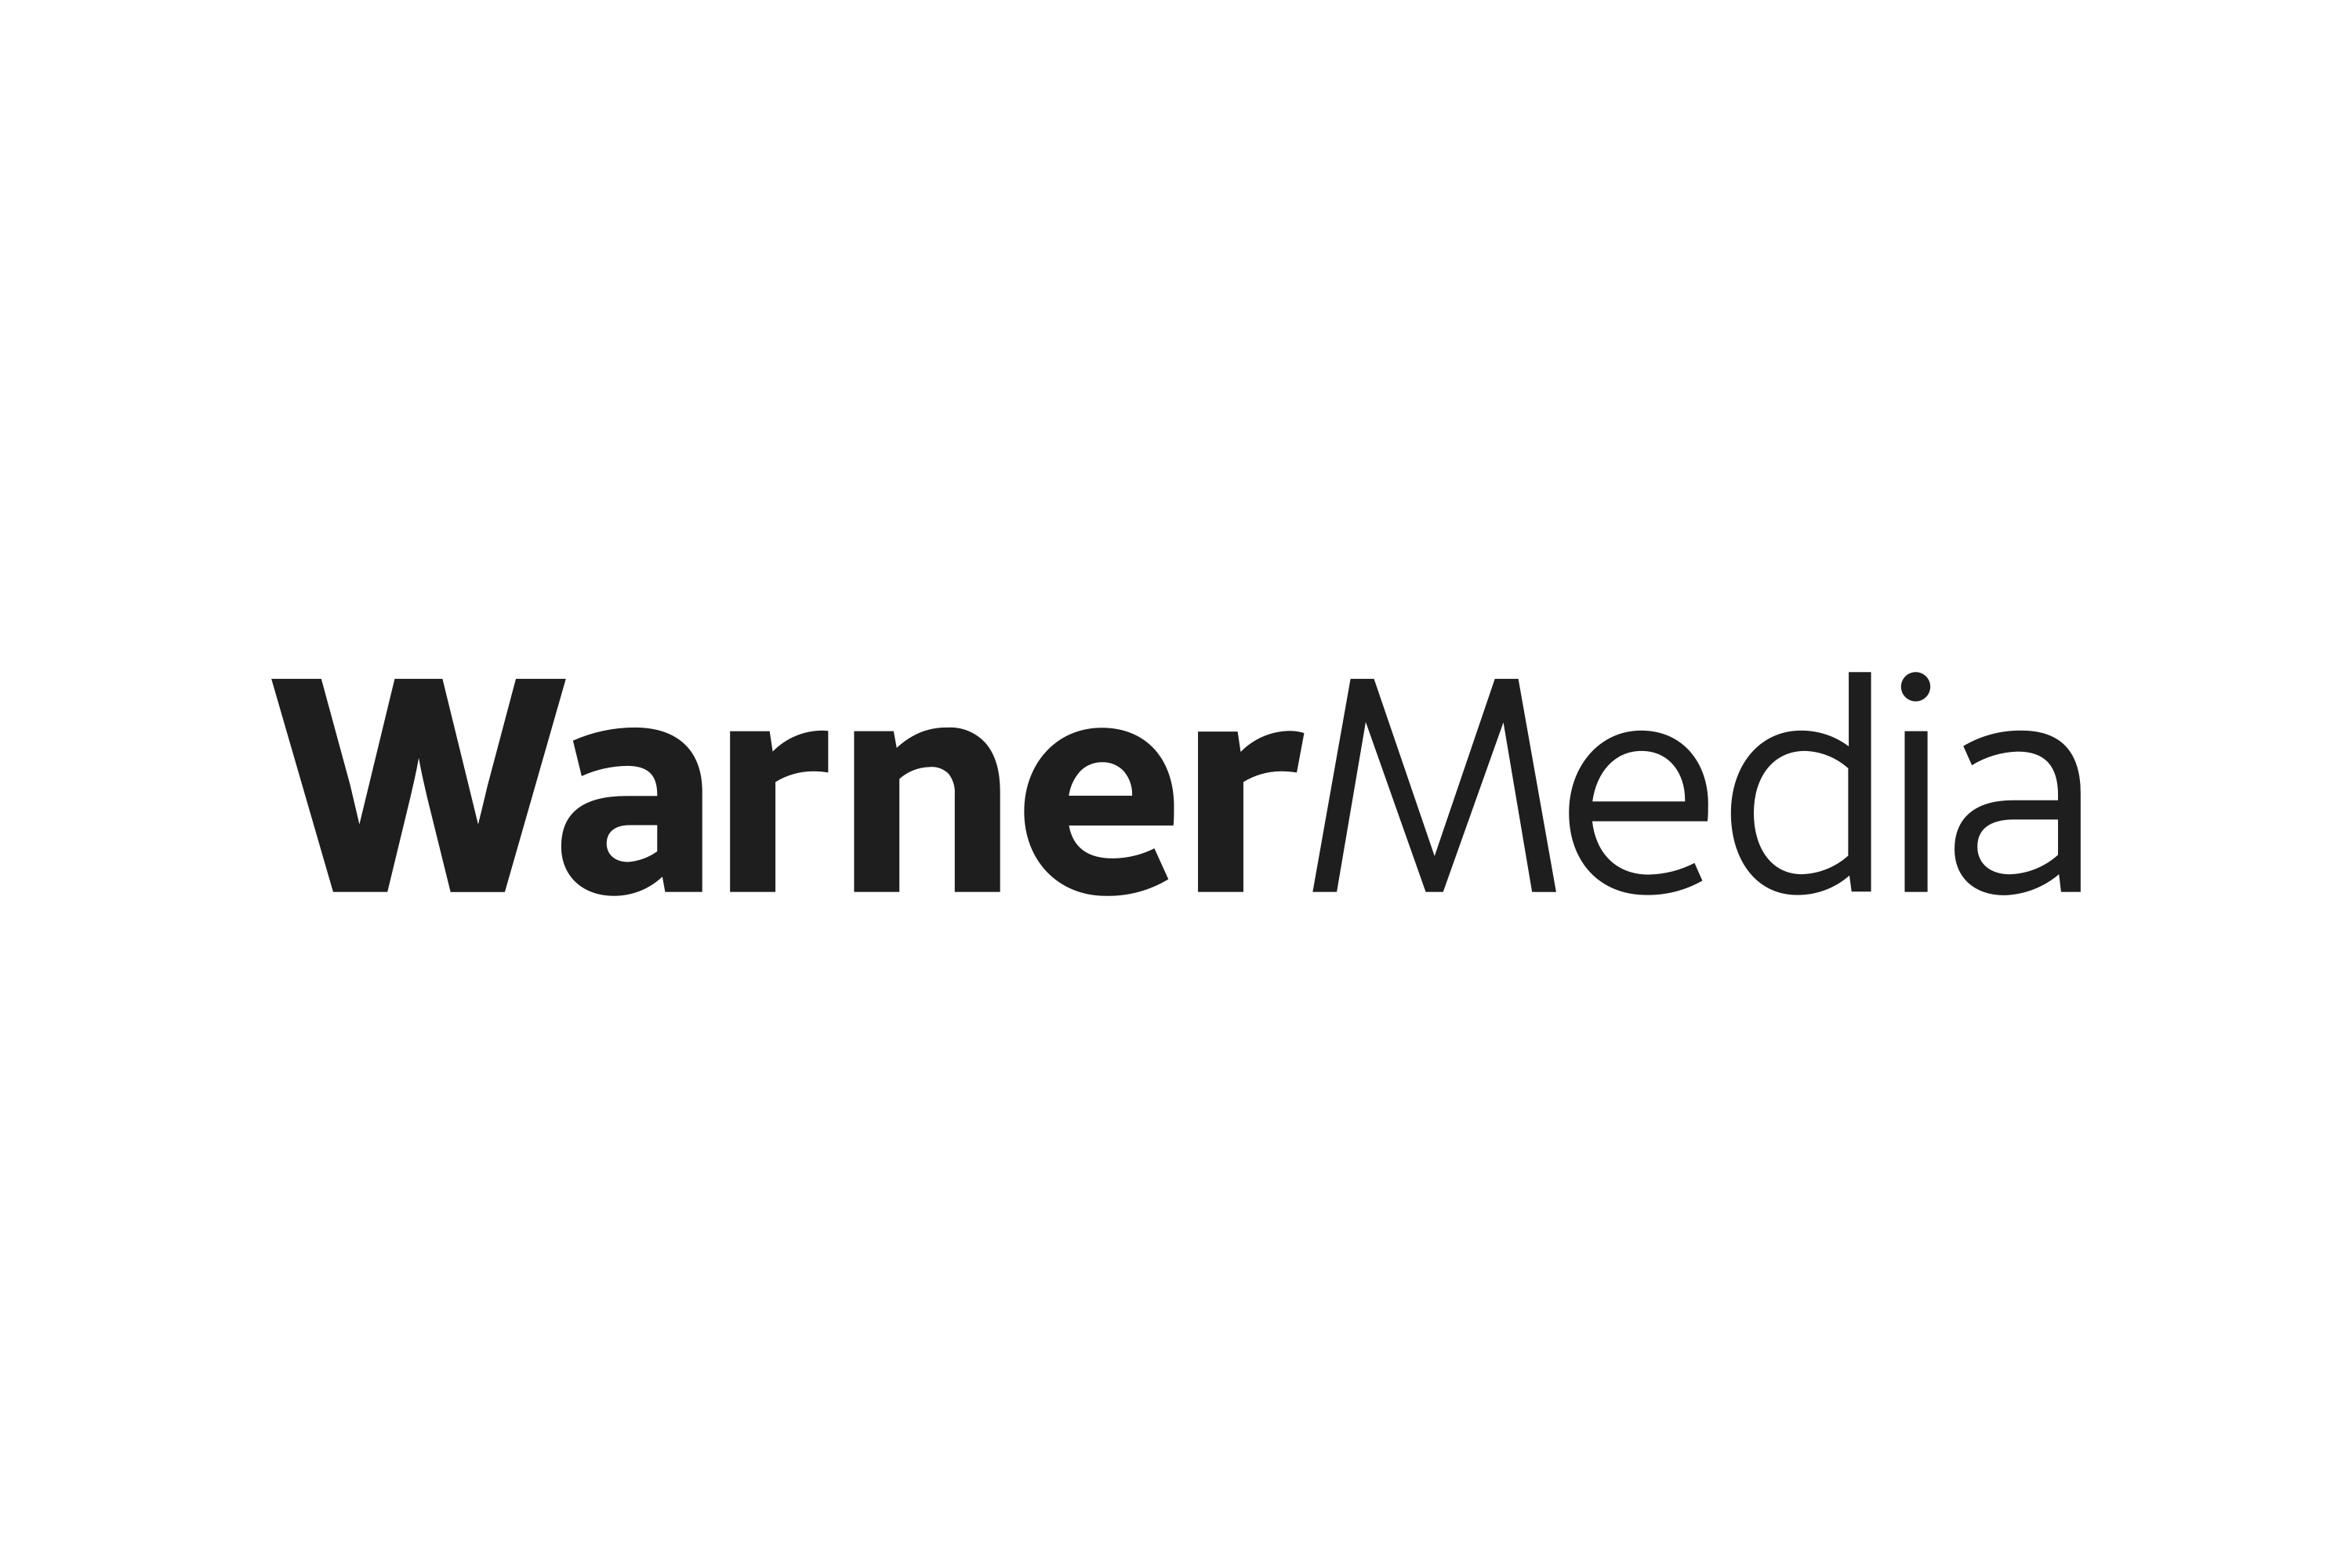 A Warnermedia Company Logo Png - piaarizal